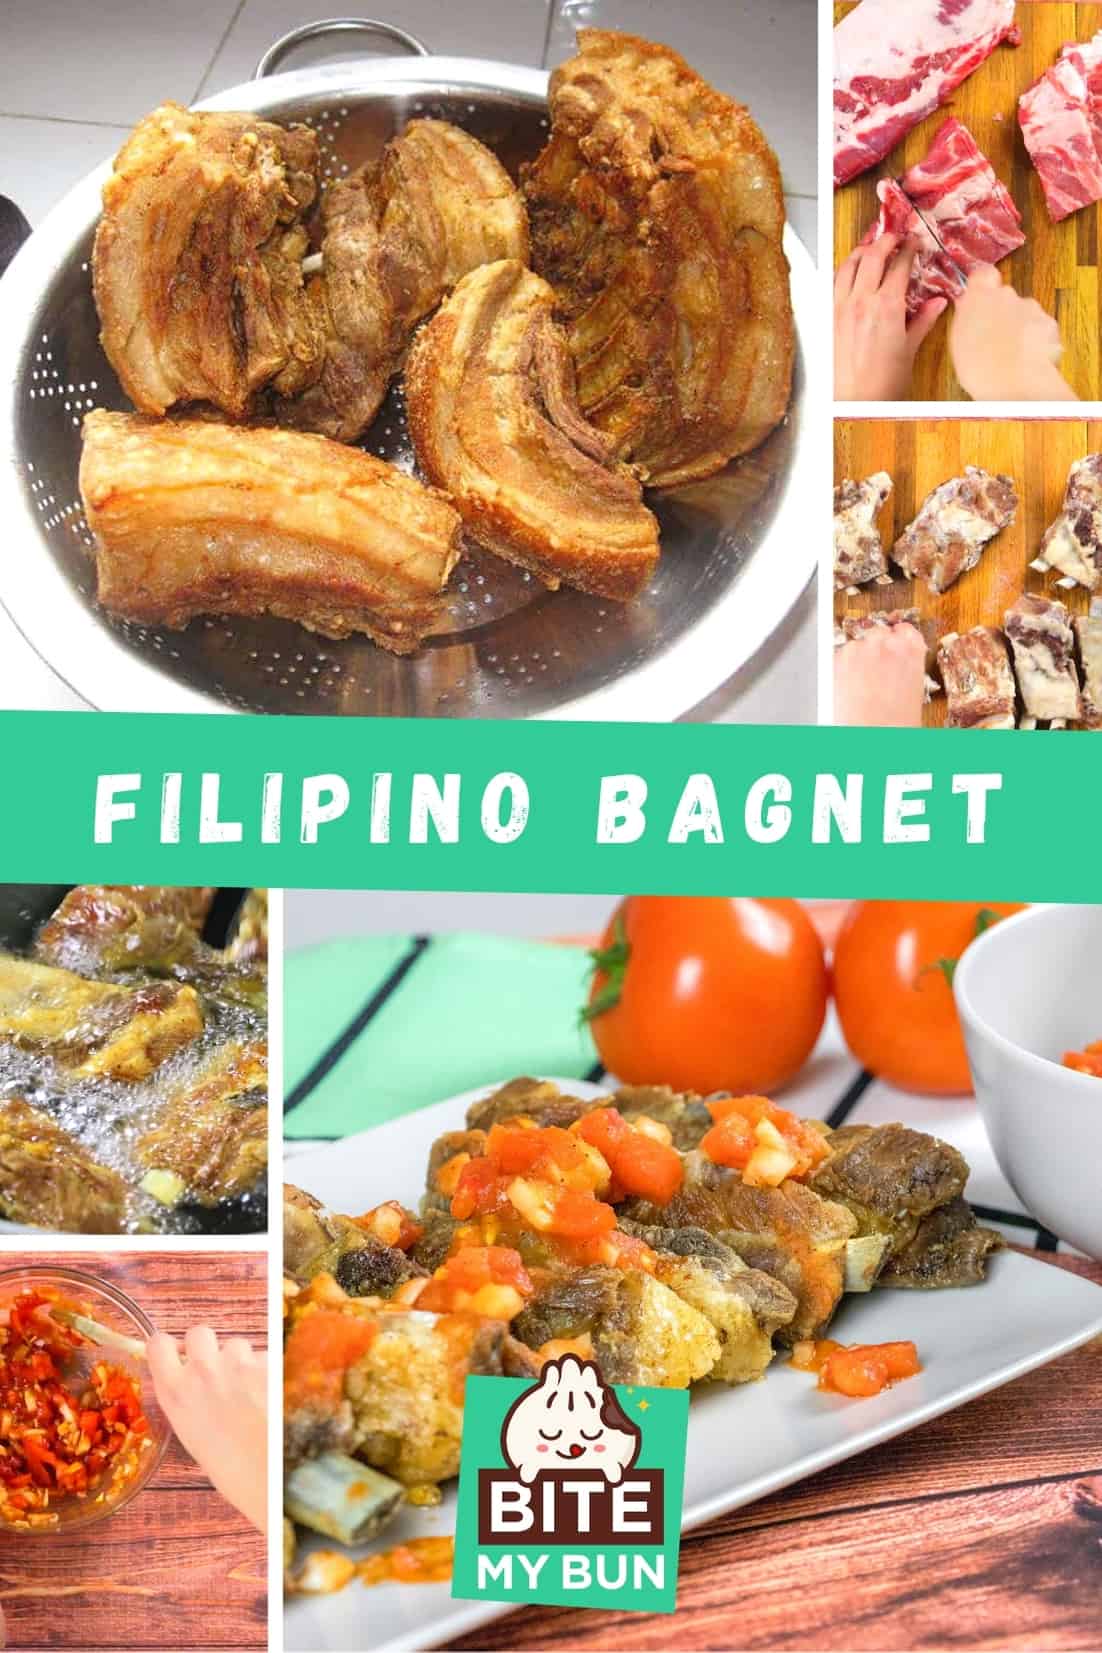 Crispy Filipino bagnet with bagoong alamang dip